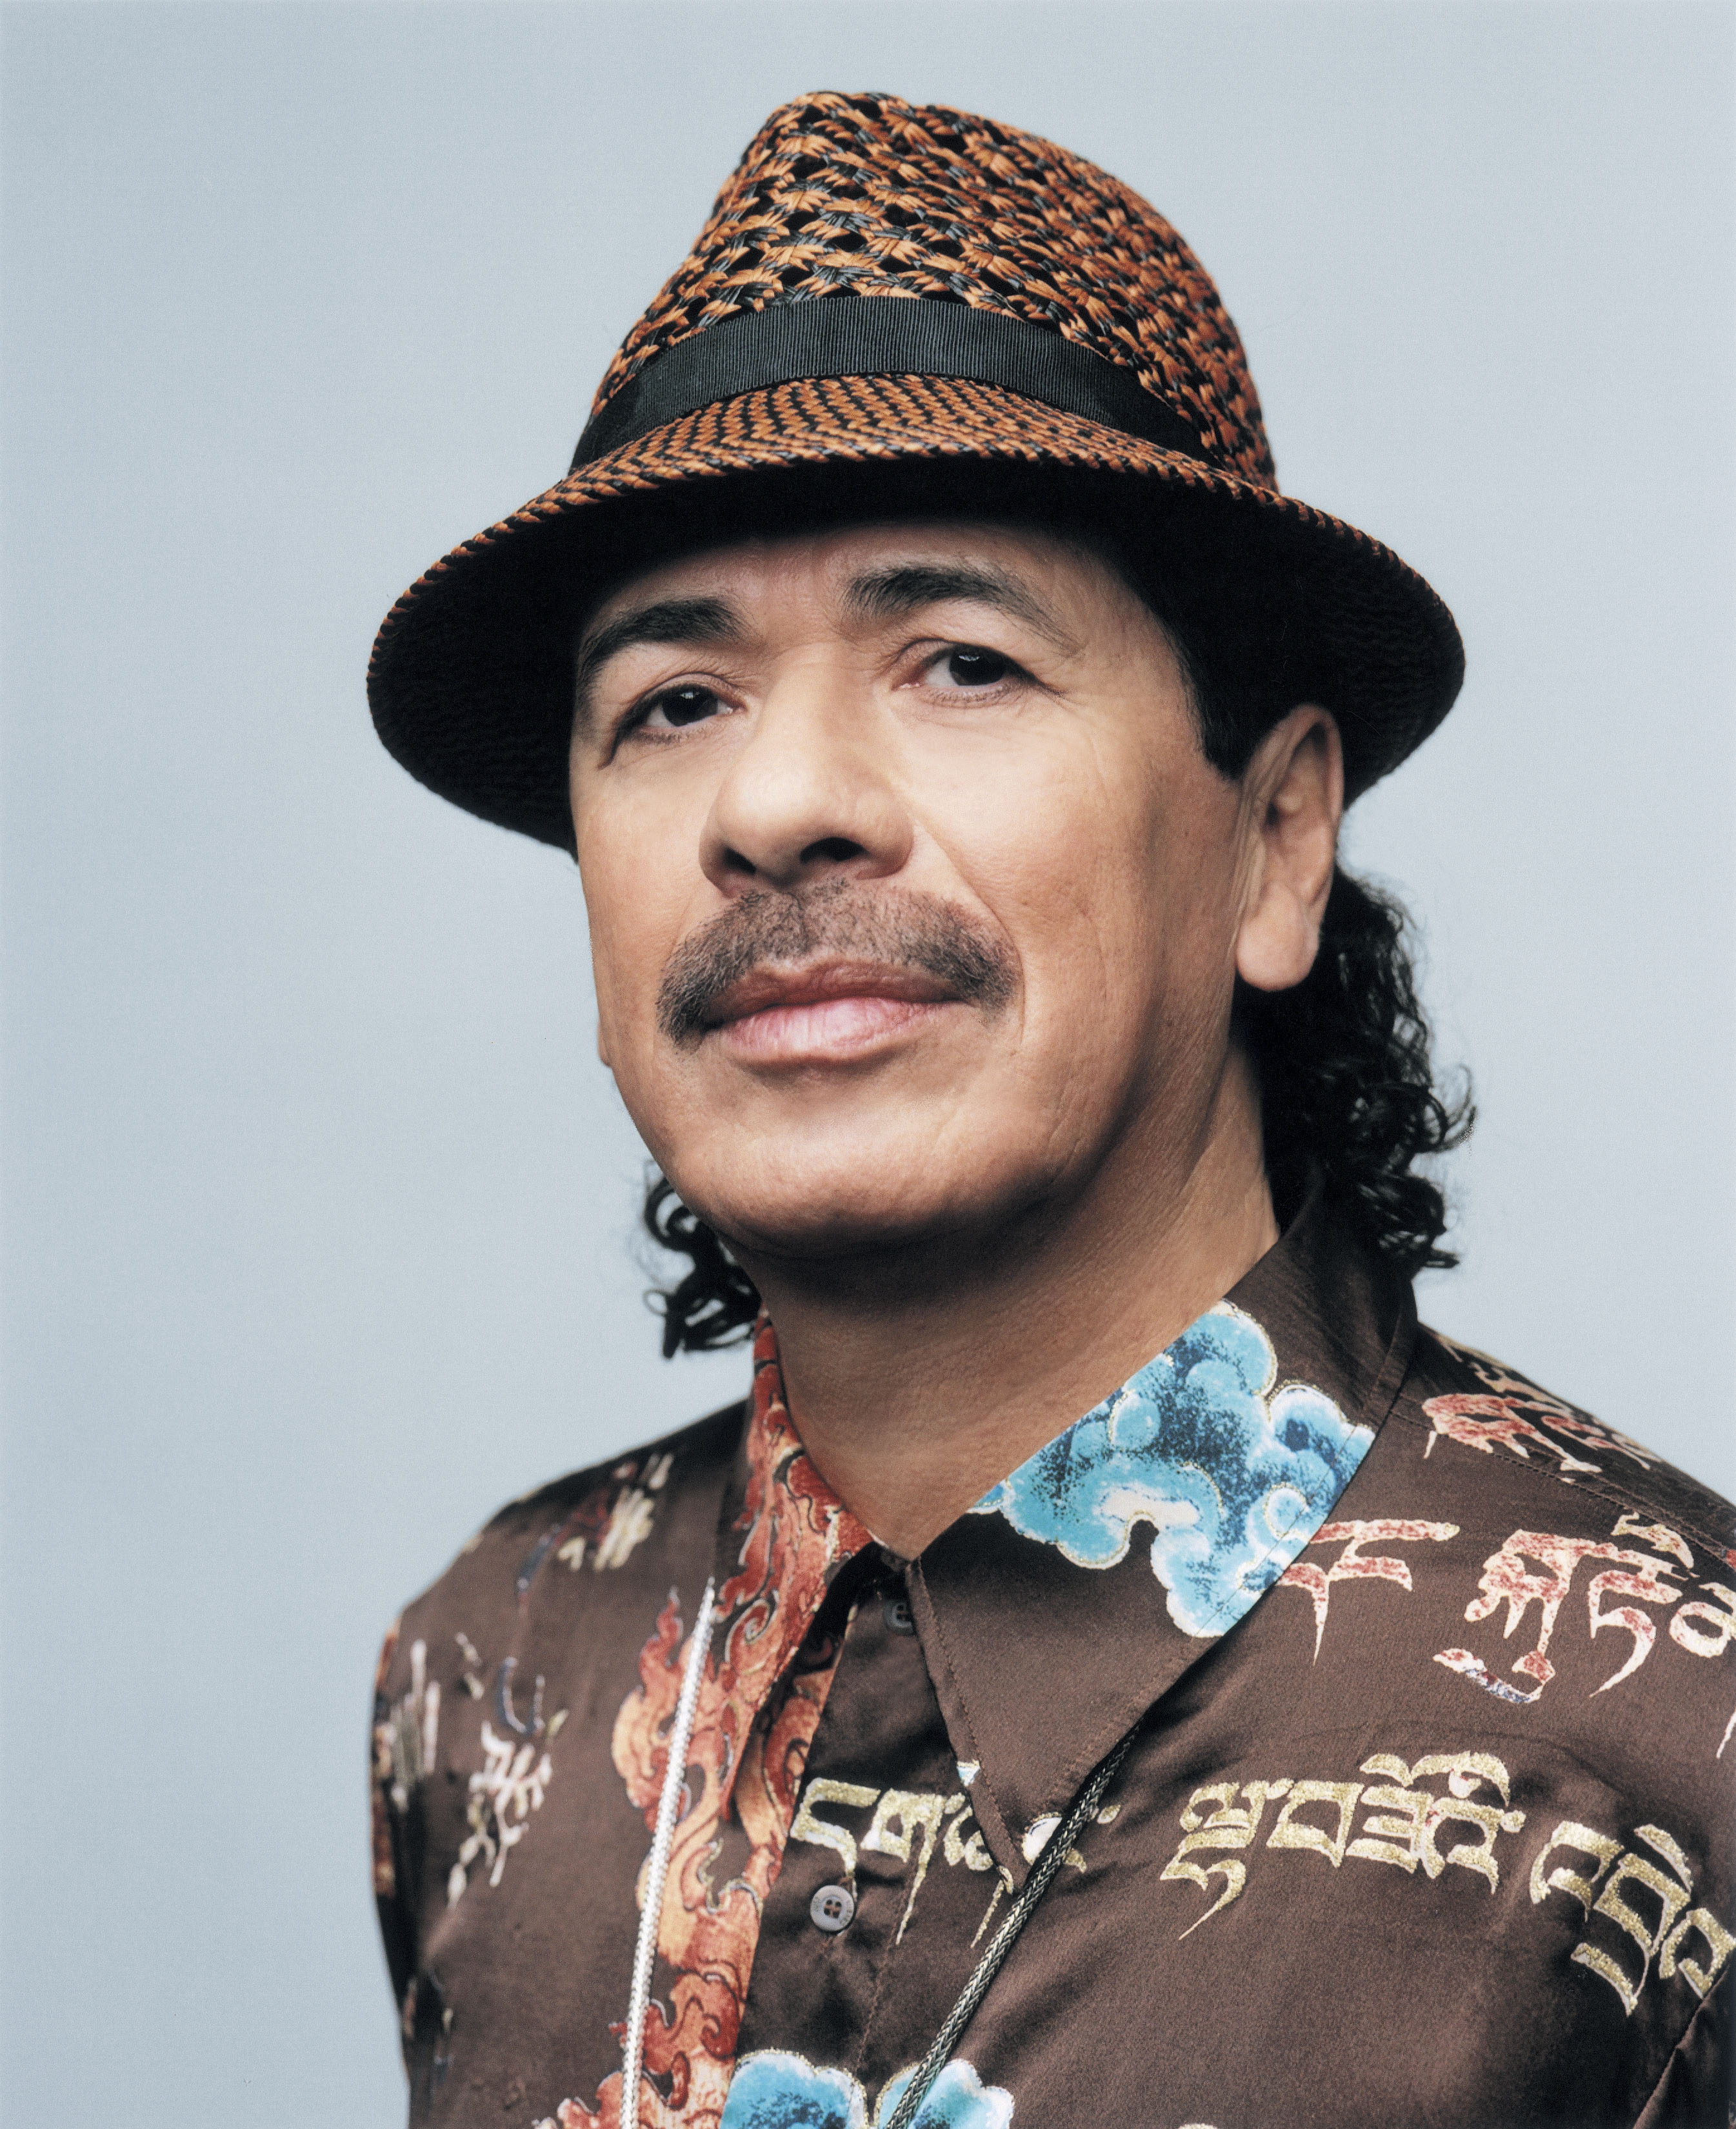 Carlos Santana